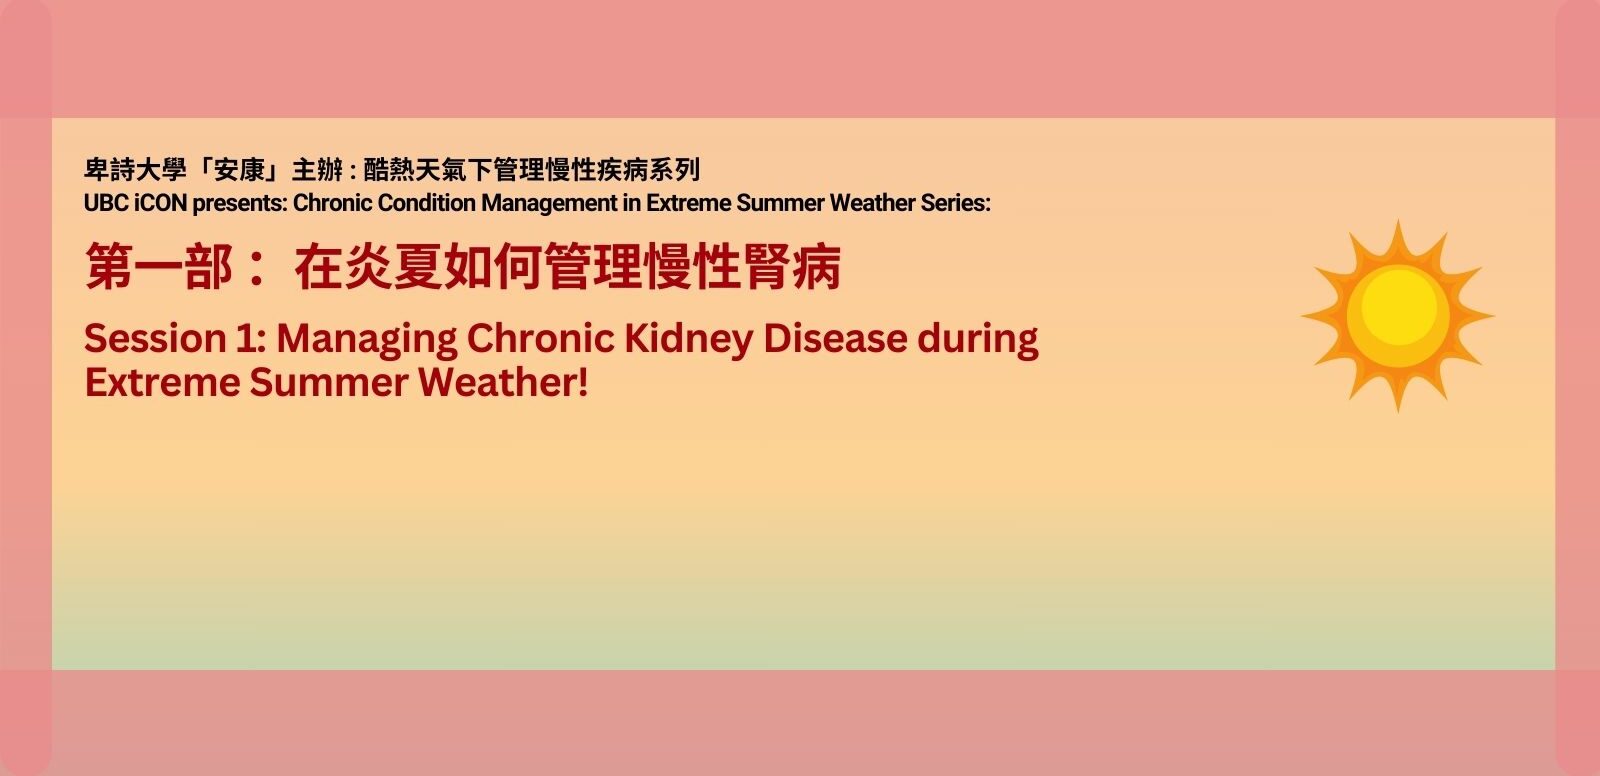 Managing Chronic Kidney Disease during Extreme Summer Weather